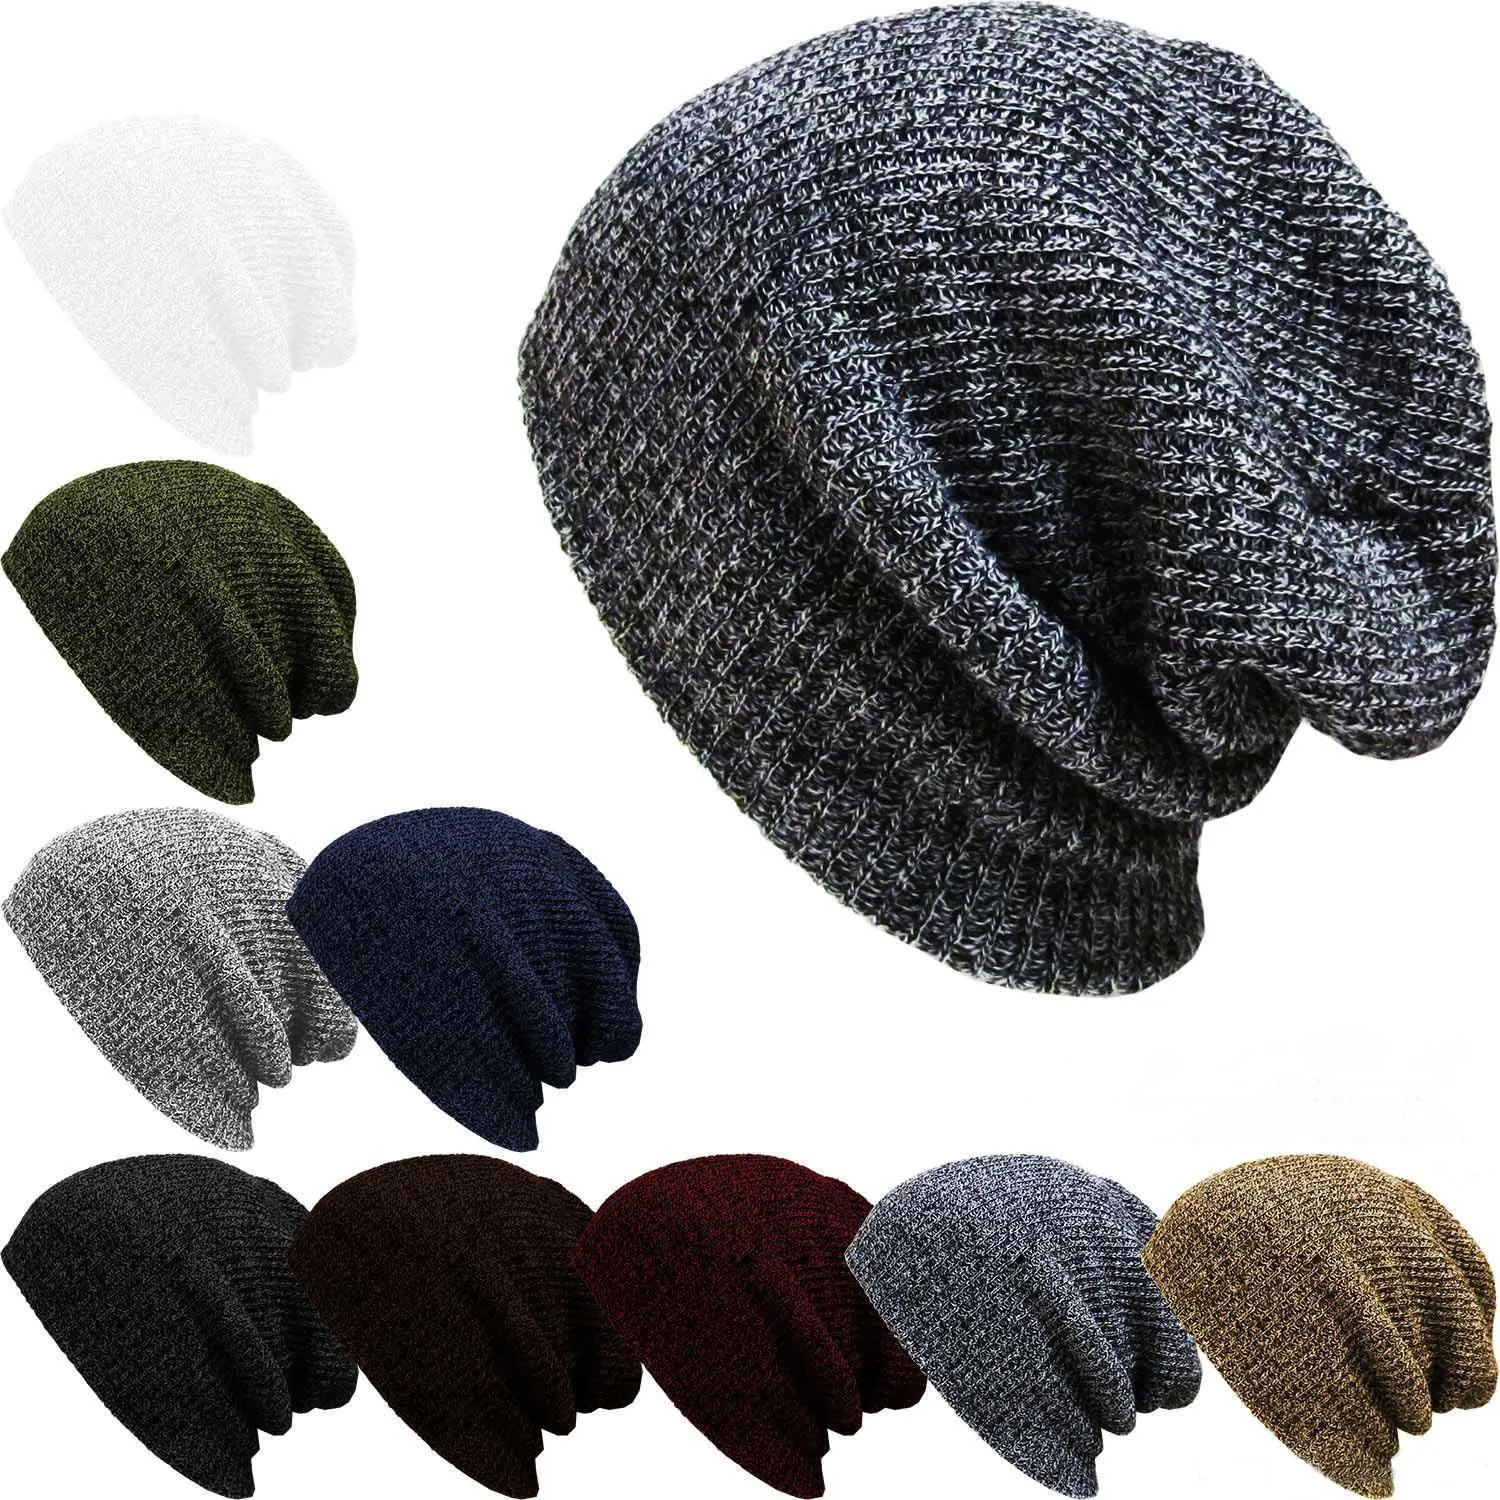 Knit Men's Women's Baggy Beanie Oversize Winter Warm Hat Ski Slouchy Chic Crochet Knitted Cap Skull b274